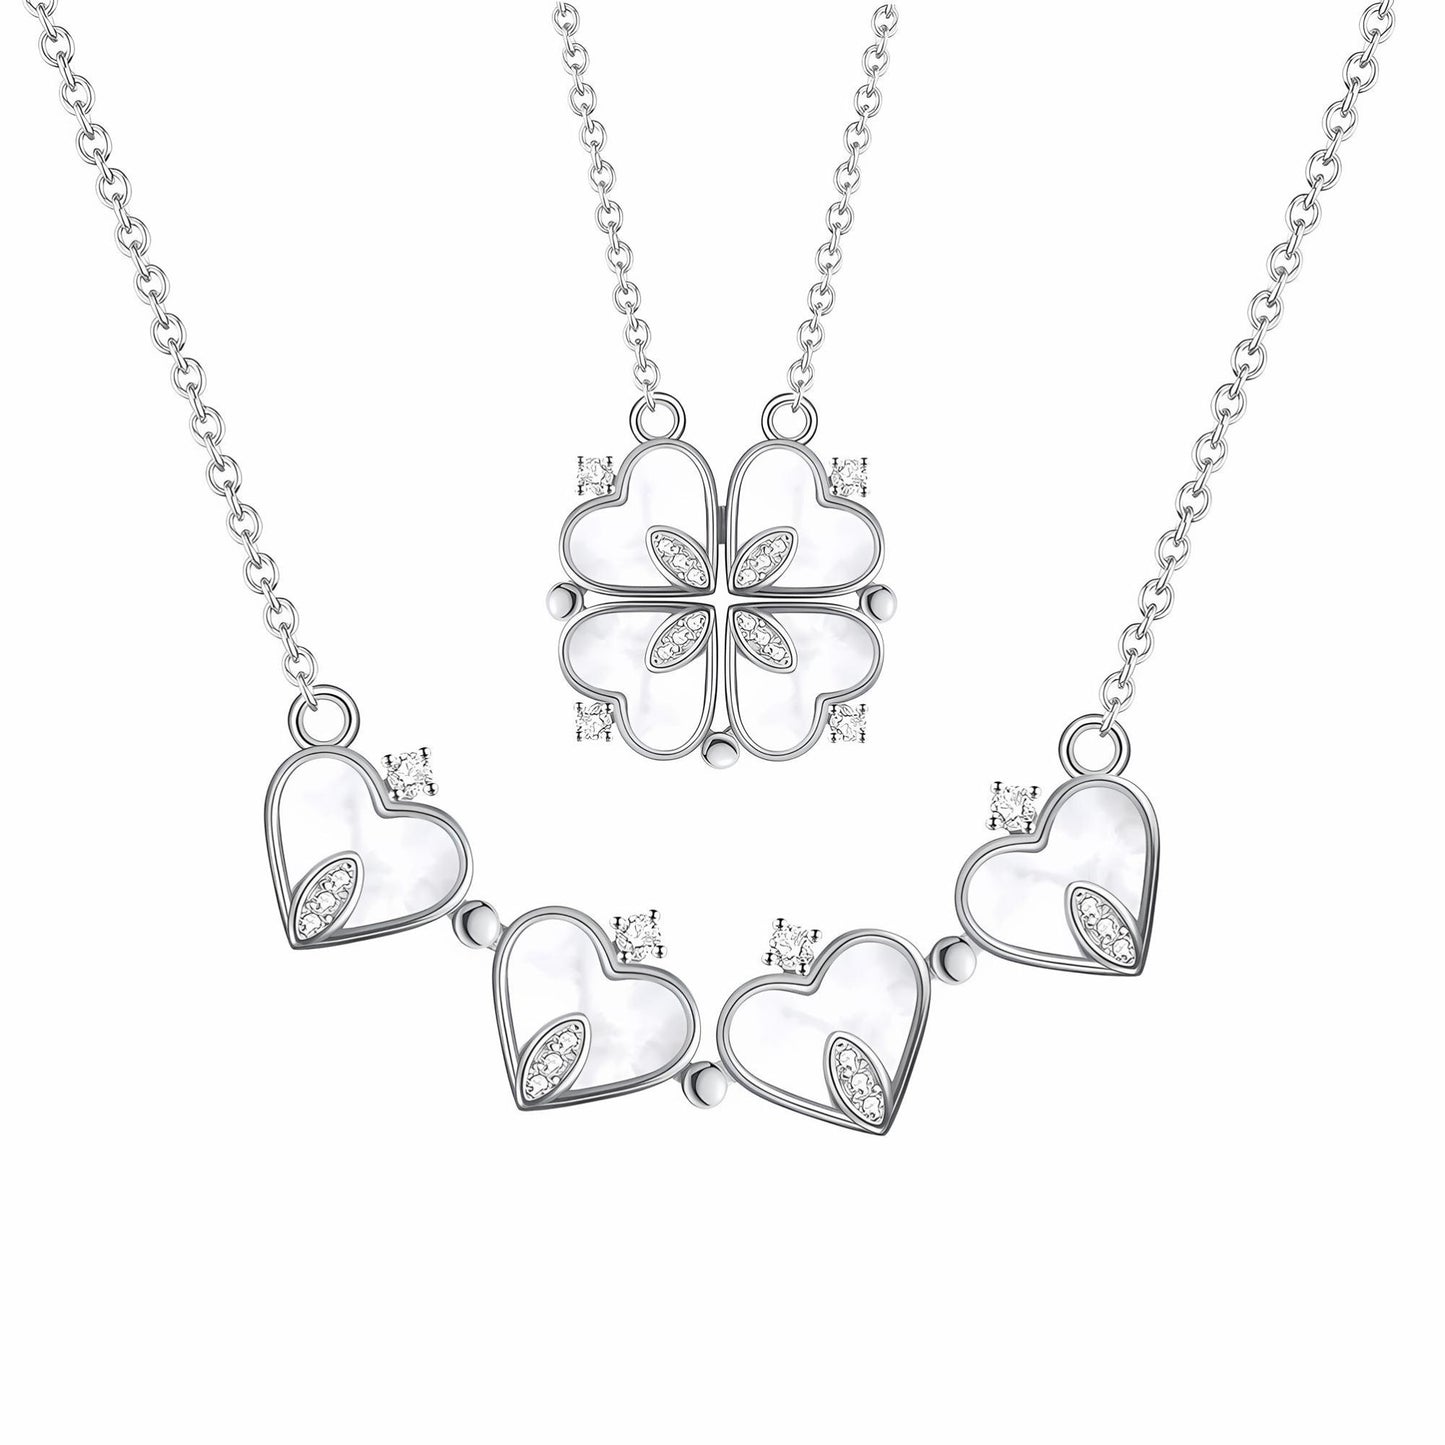 4 Leaf Clover Heart Pendant Necklace for Women Magnetic Sterling Silver Ginger Lyne Collection - Rose Gold